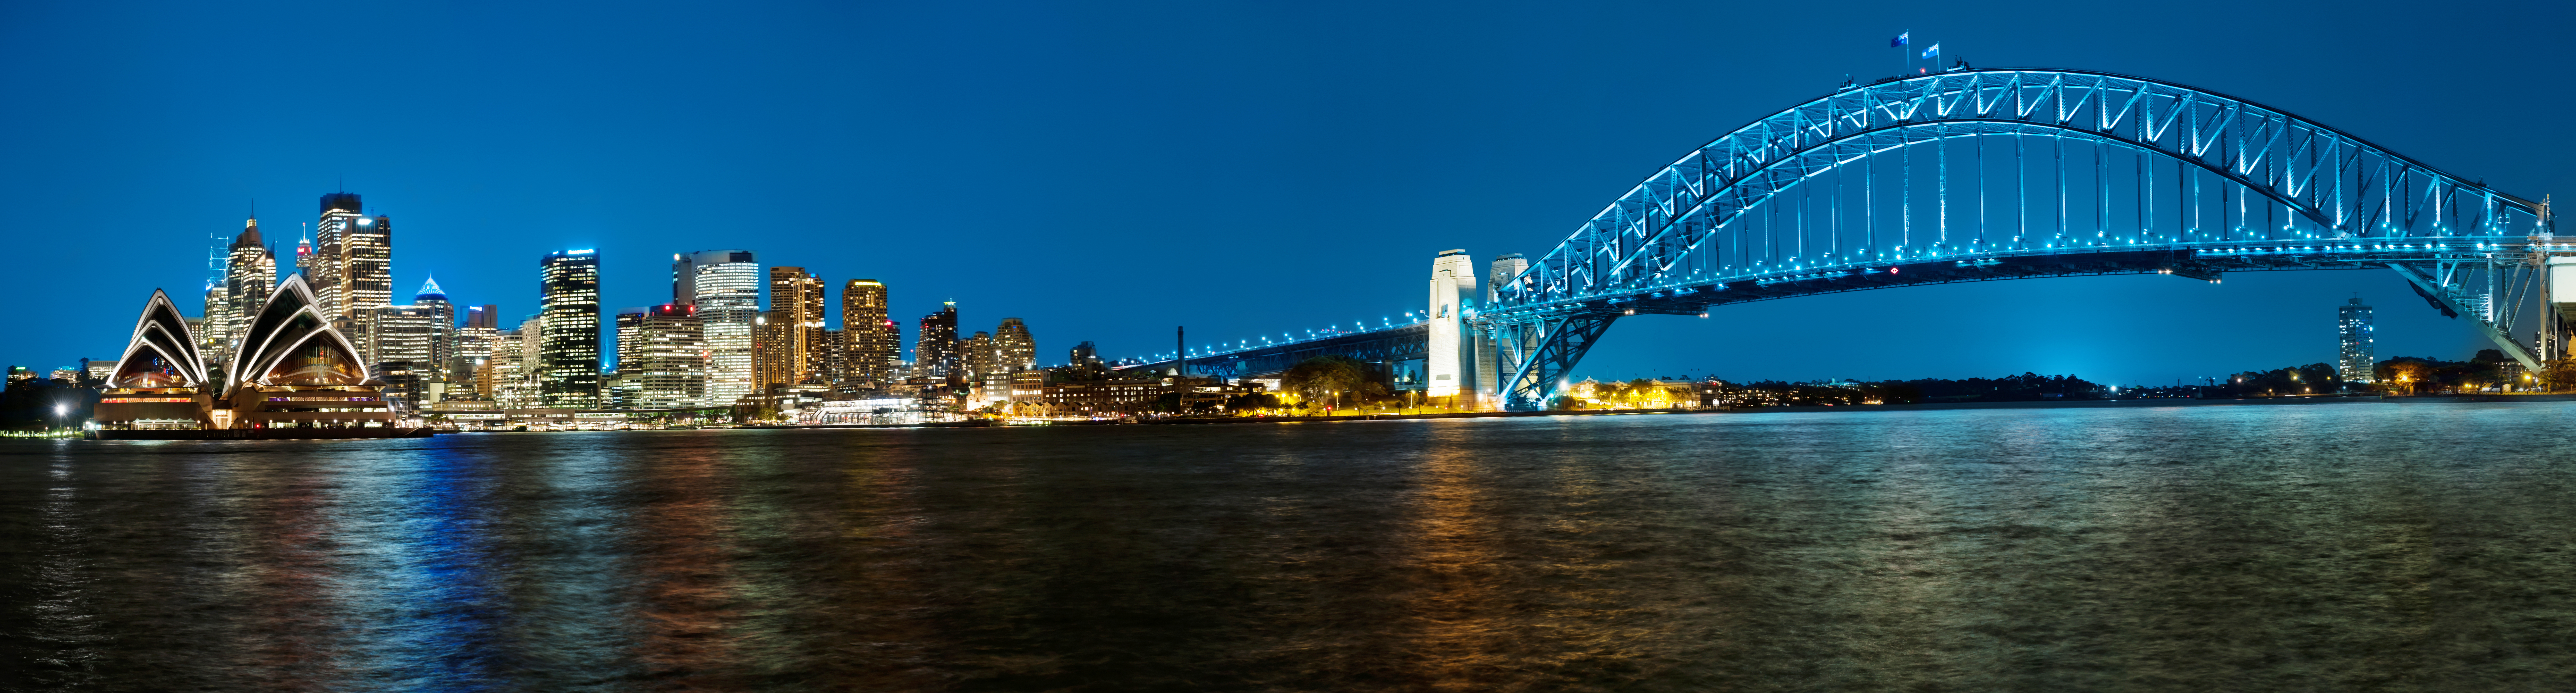 Australia Sydney Harbour Bridge Sydney Opera House 11935x3209